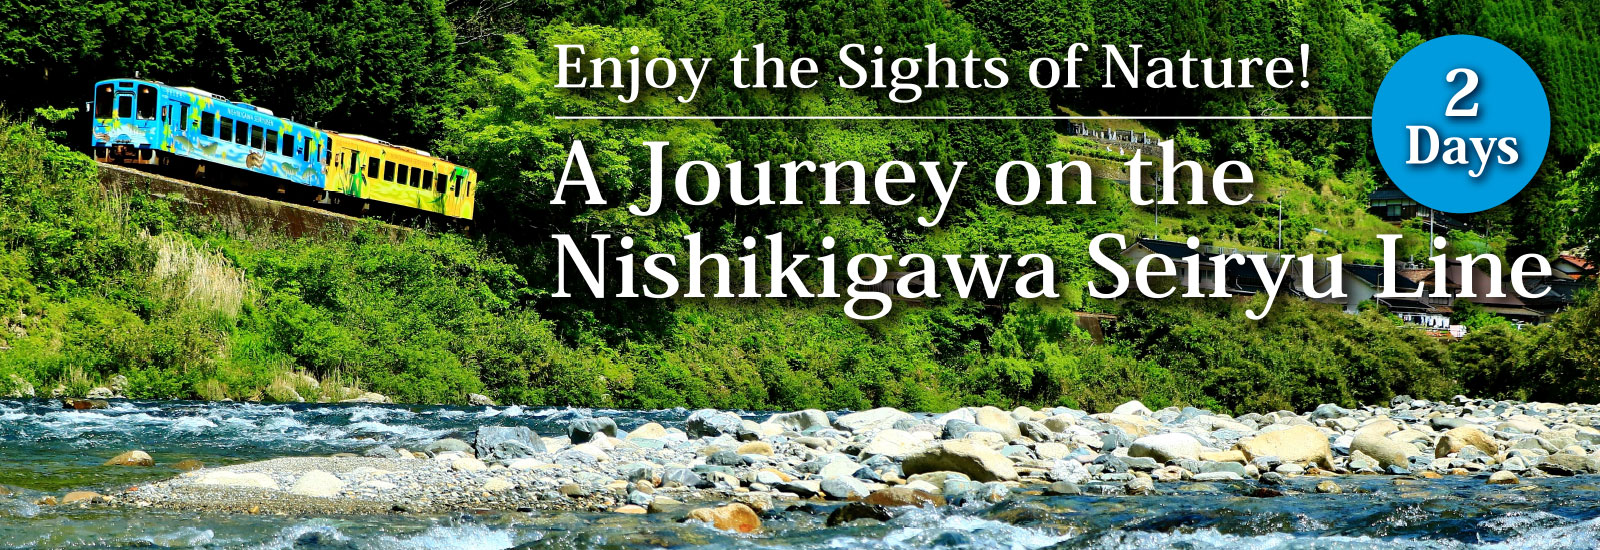 Enjoy the Sights of Nature! A Journey on the Nishikigawa Seiryu Line image photo